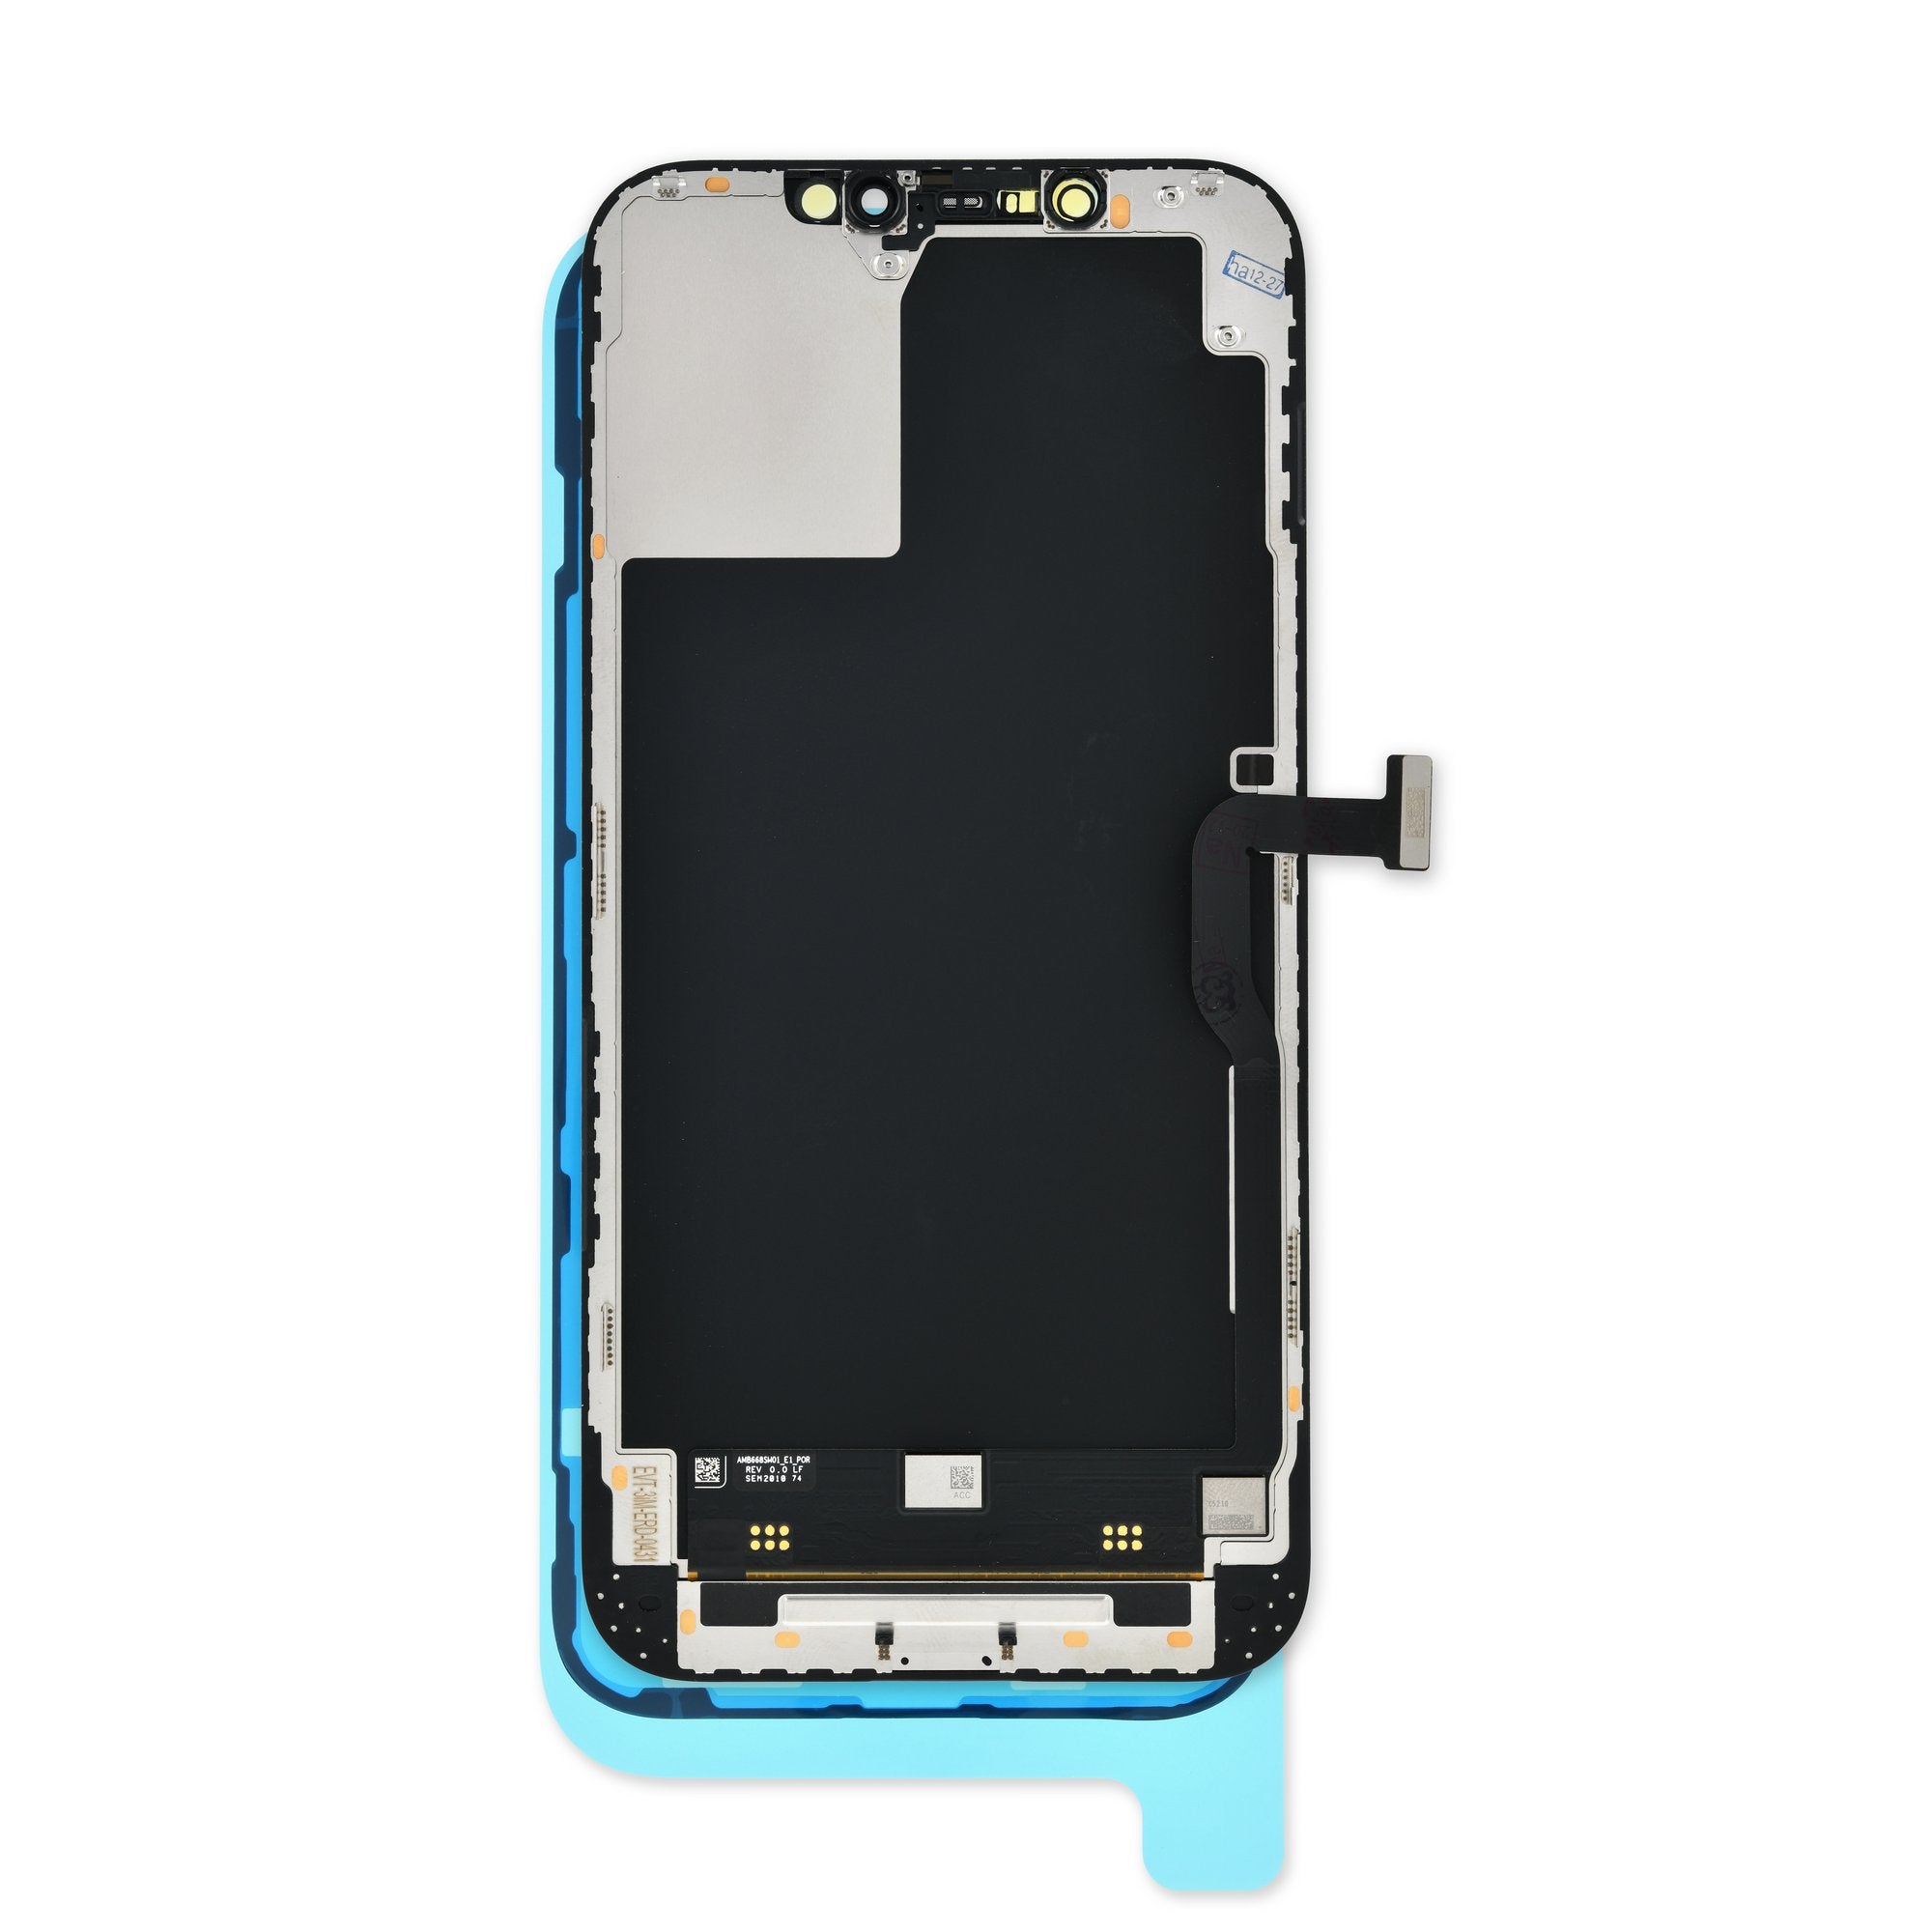 iPhone 12 Pro Max Screen: LCD and Digitizer Repair Kit - iFixit